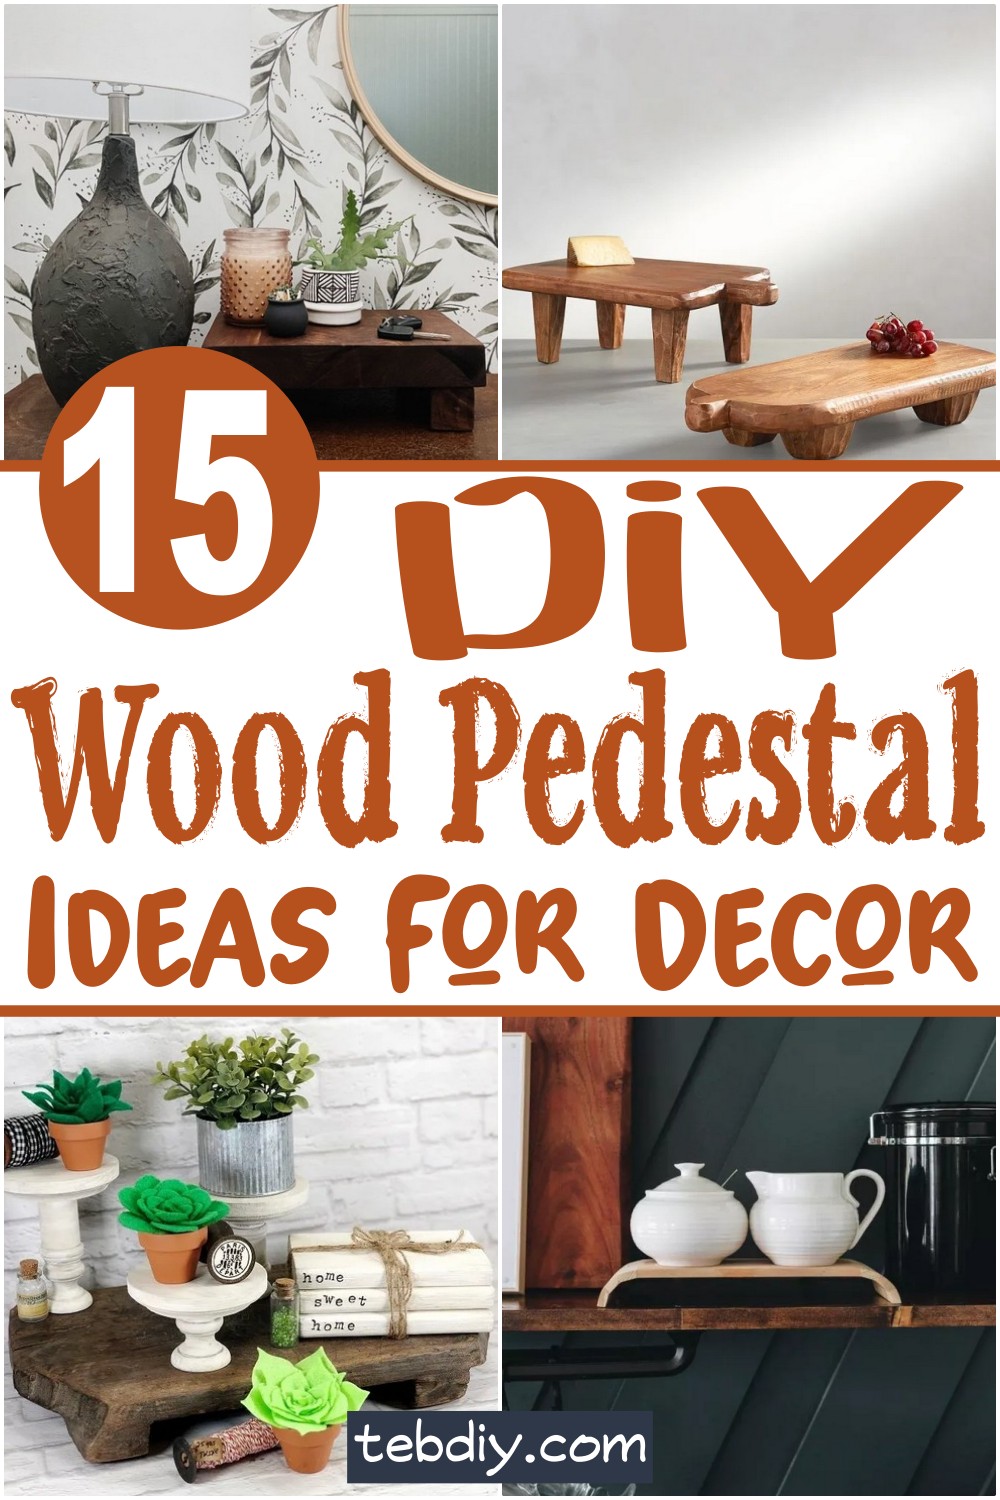 15 DIY Wood Pedestal Ideas For Home Decoration